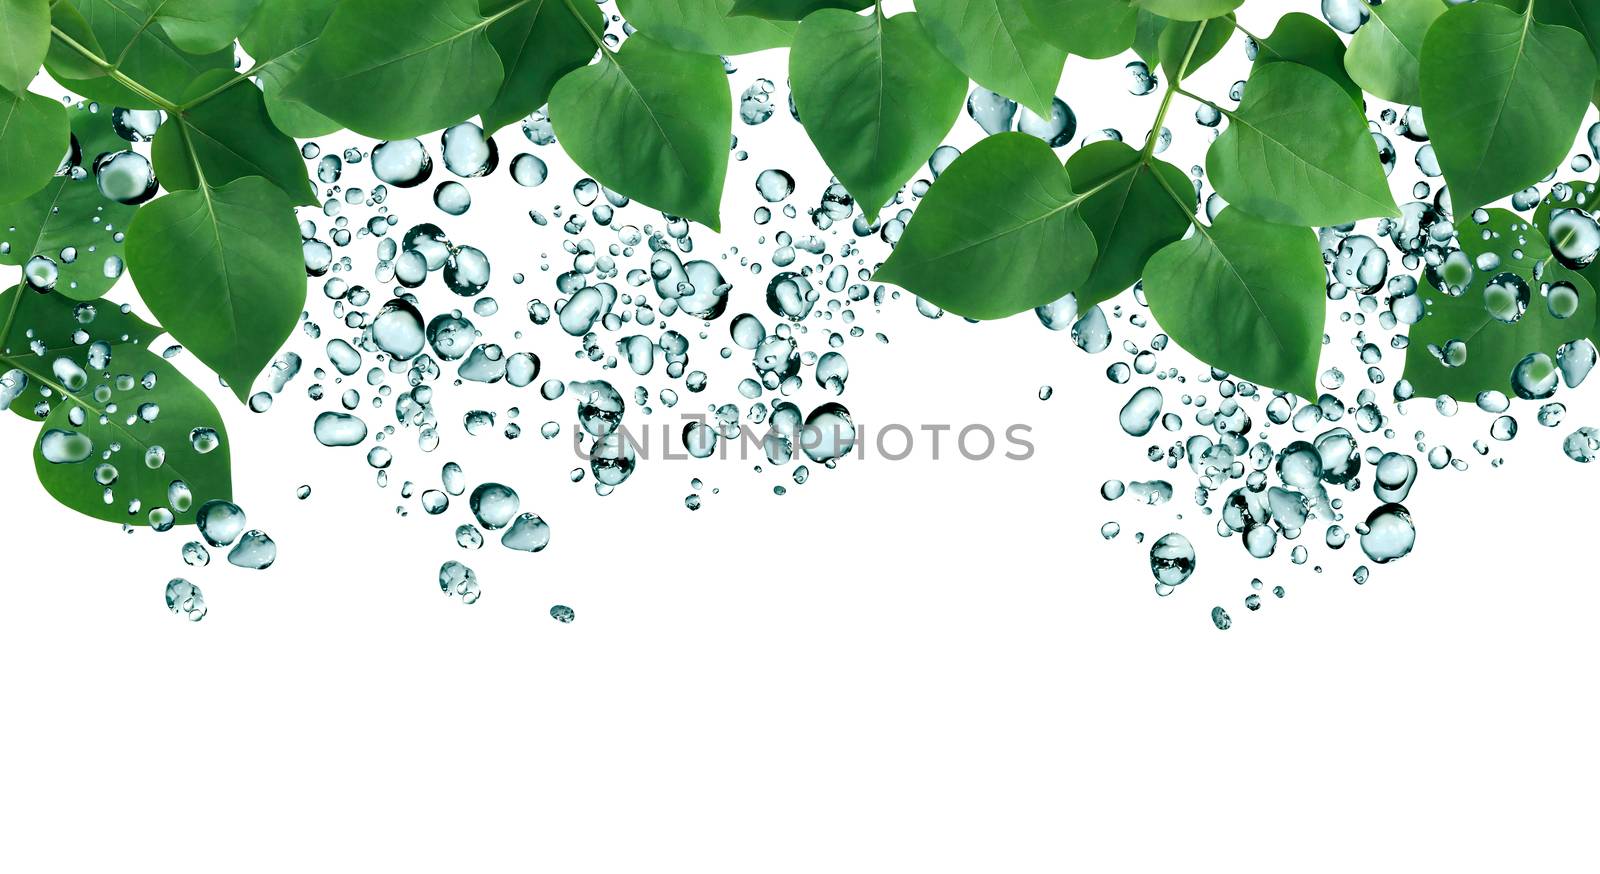 Green Leaves And Raindrops by kvkirillov